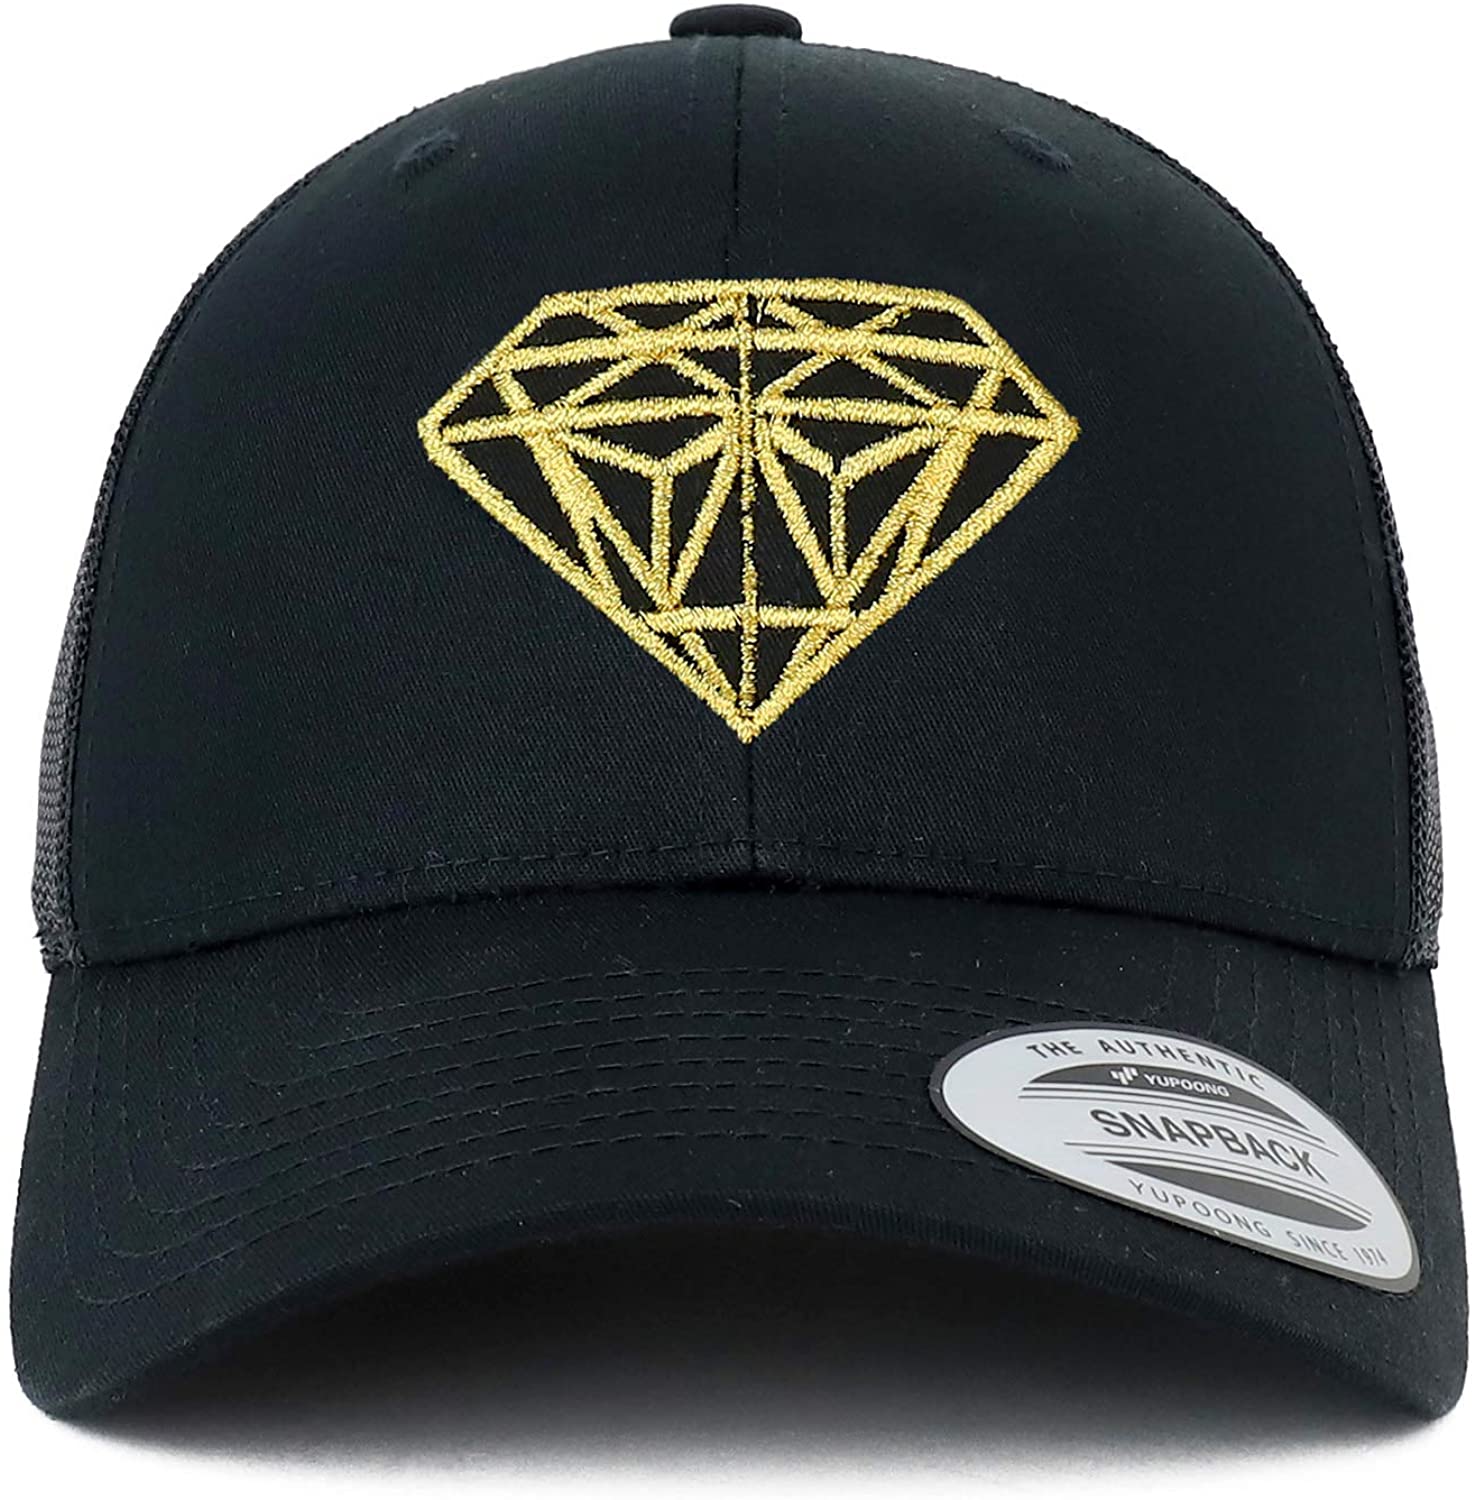 Armycrew Flexfit Oversize XXL Gold Diamond Embroidered Retro Trucker Mesh Cap